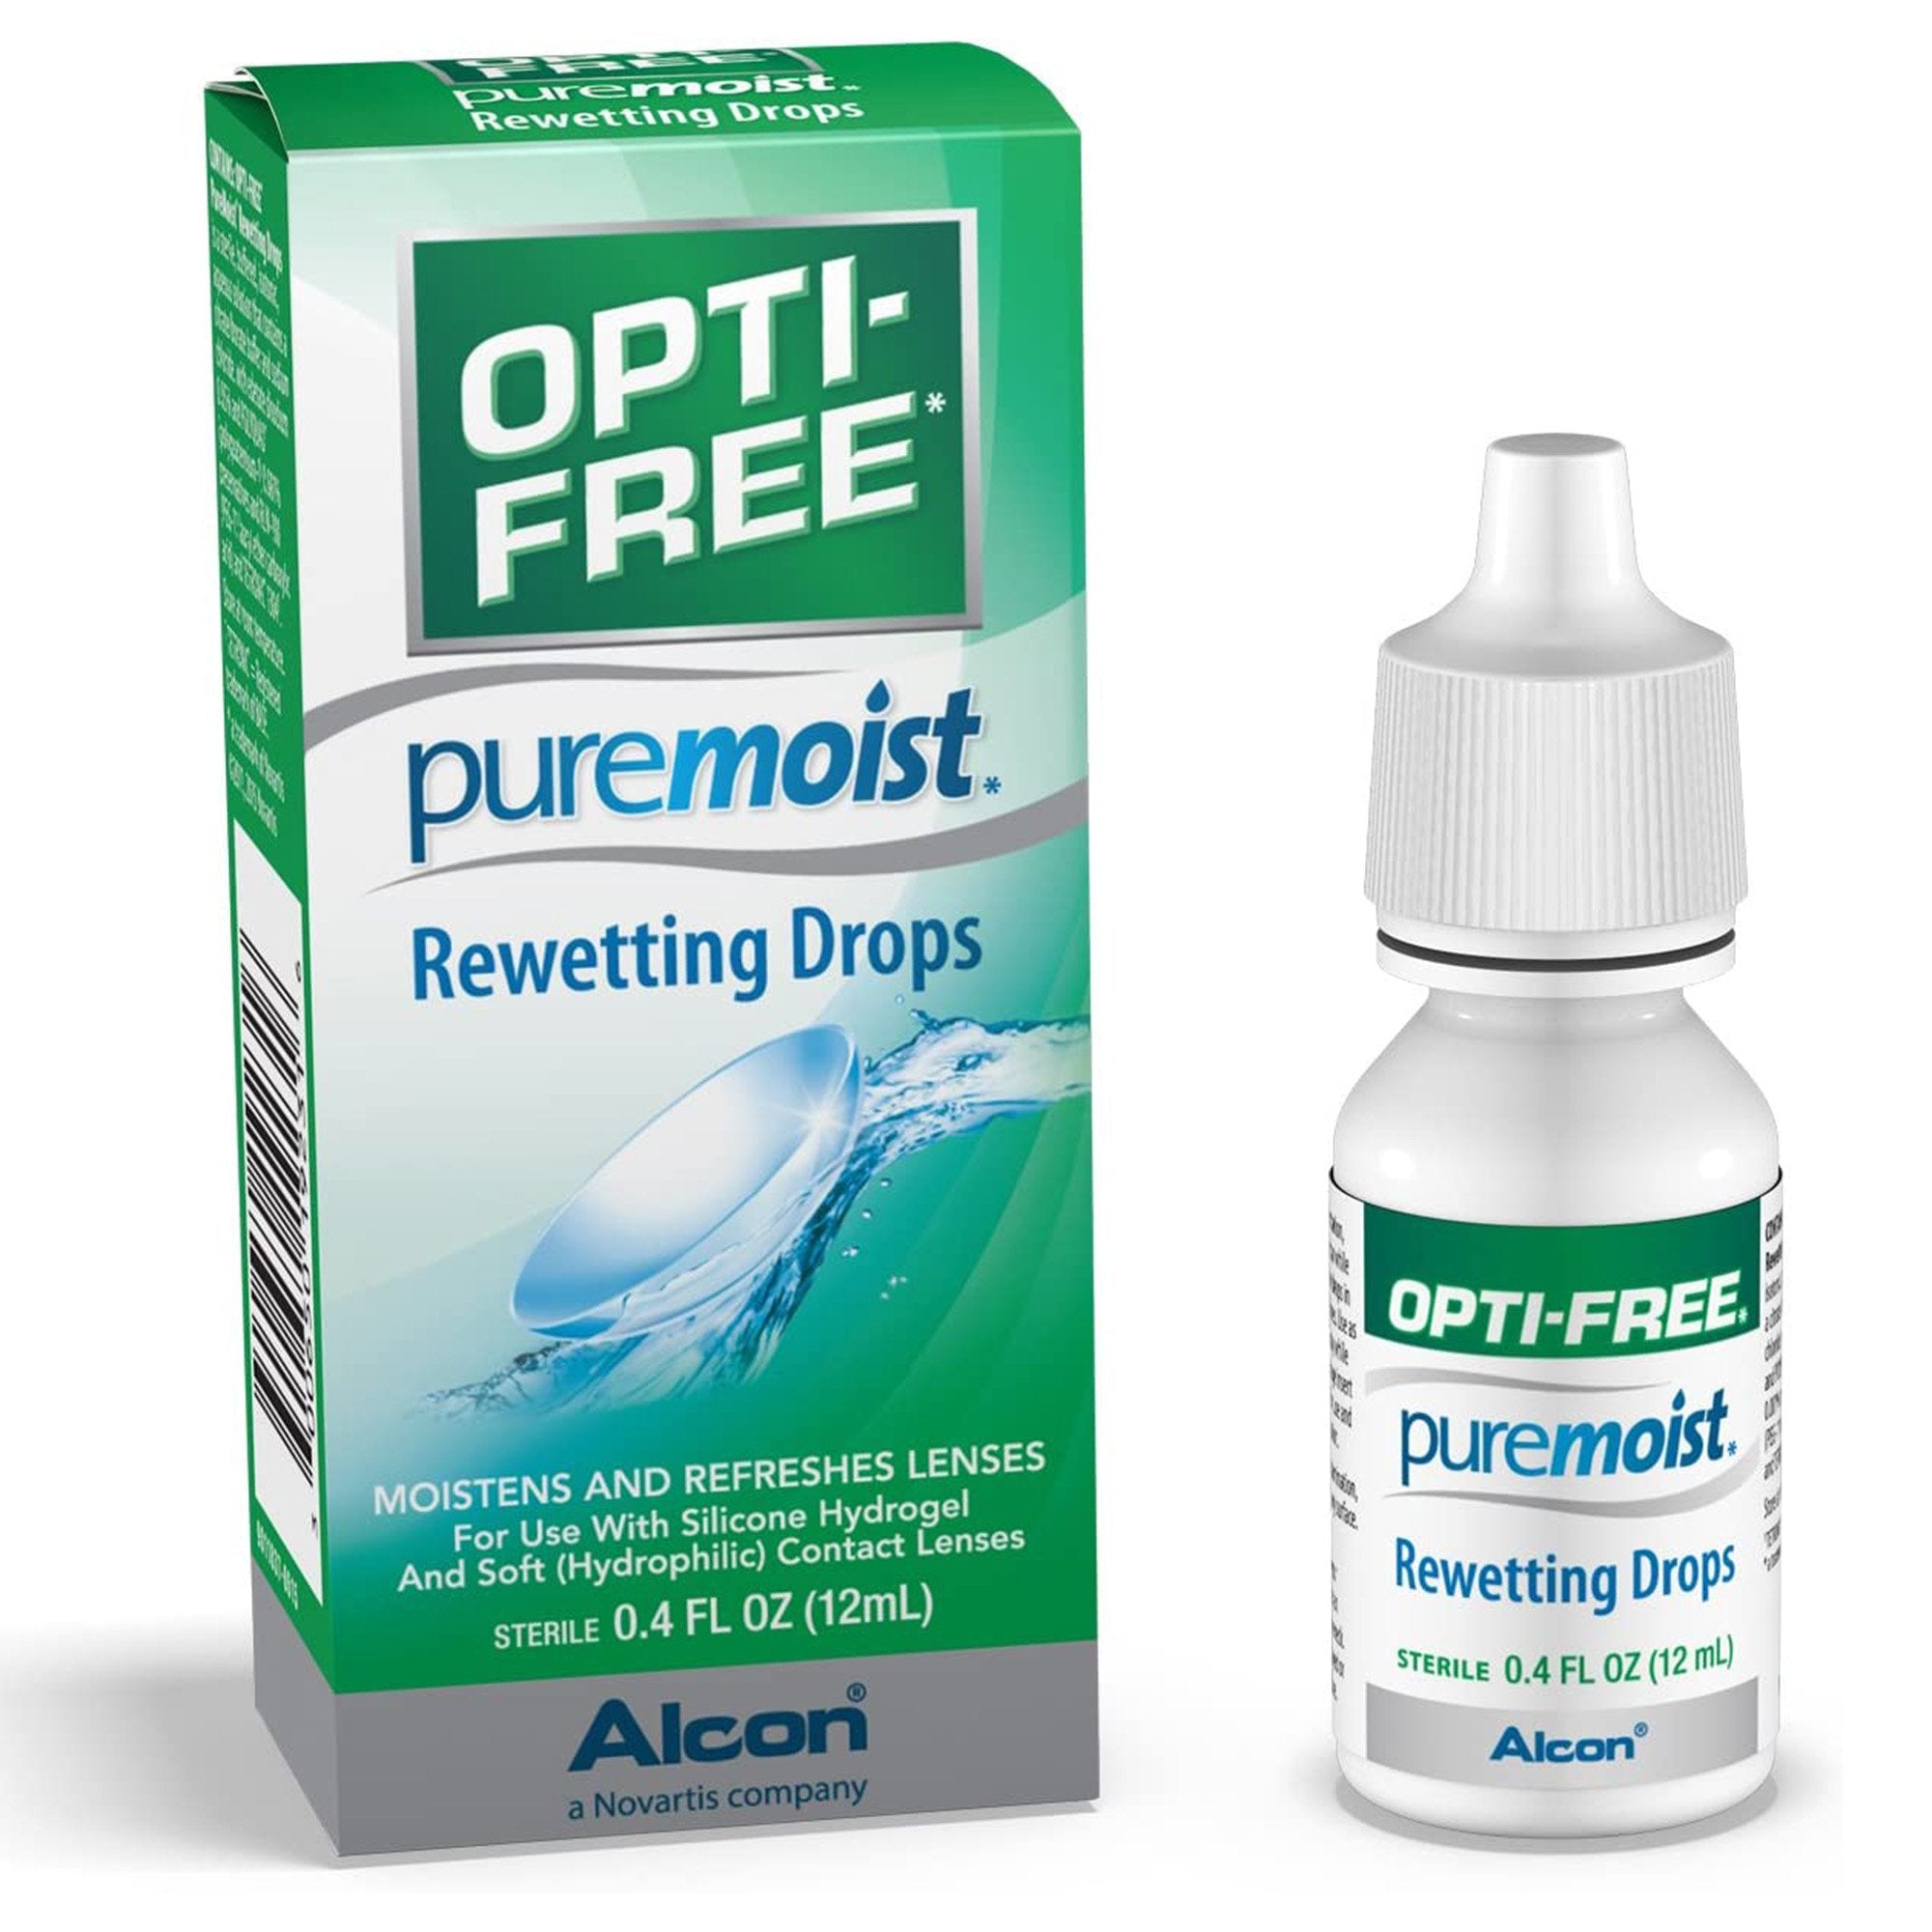 Opti-Free? Puremoist? Citrate Buffer / Sodium Chloride Rewetting Drops